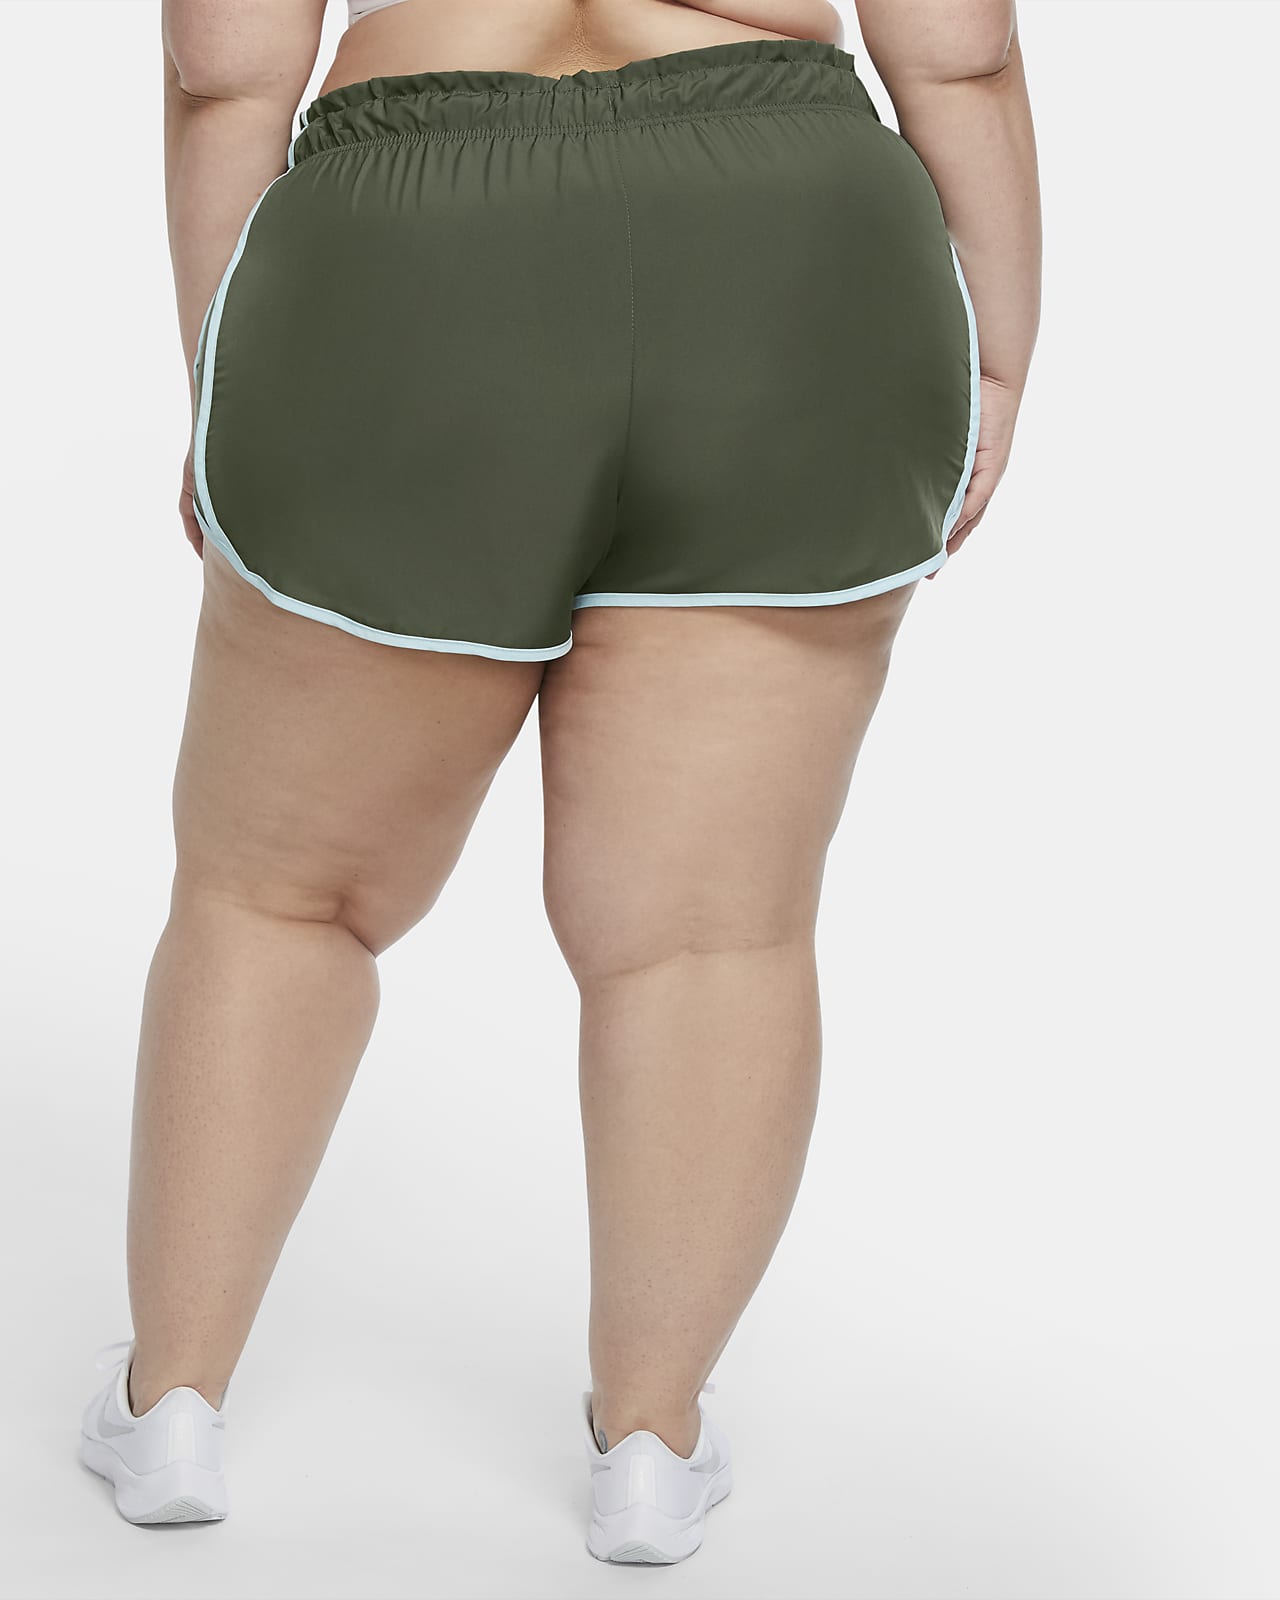 womens 1x nike shorts